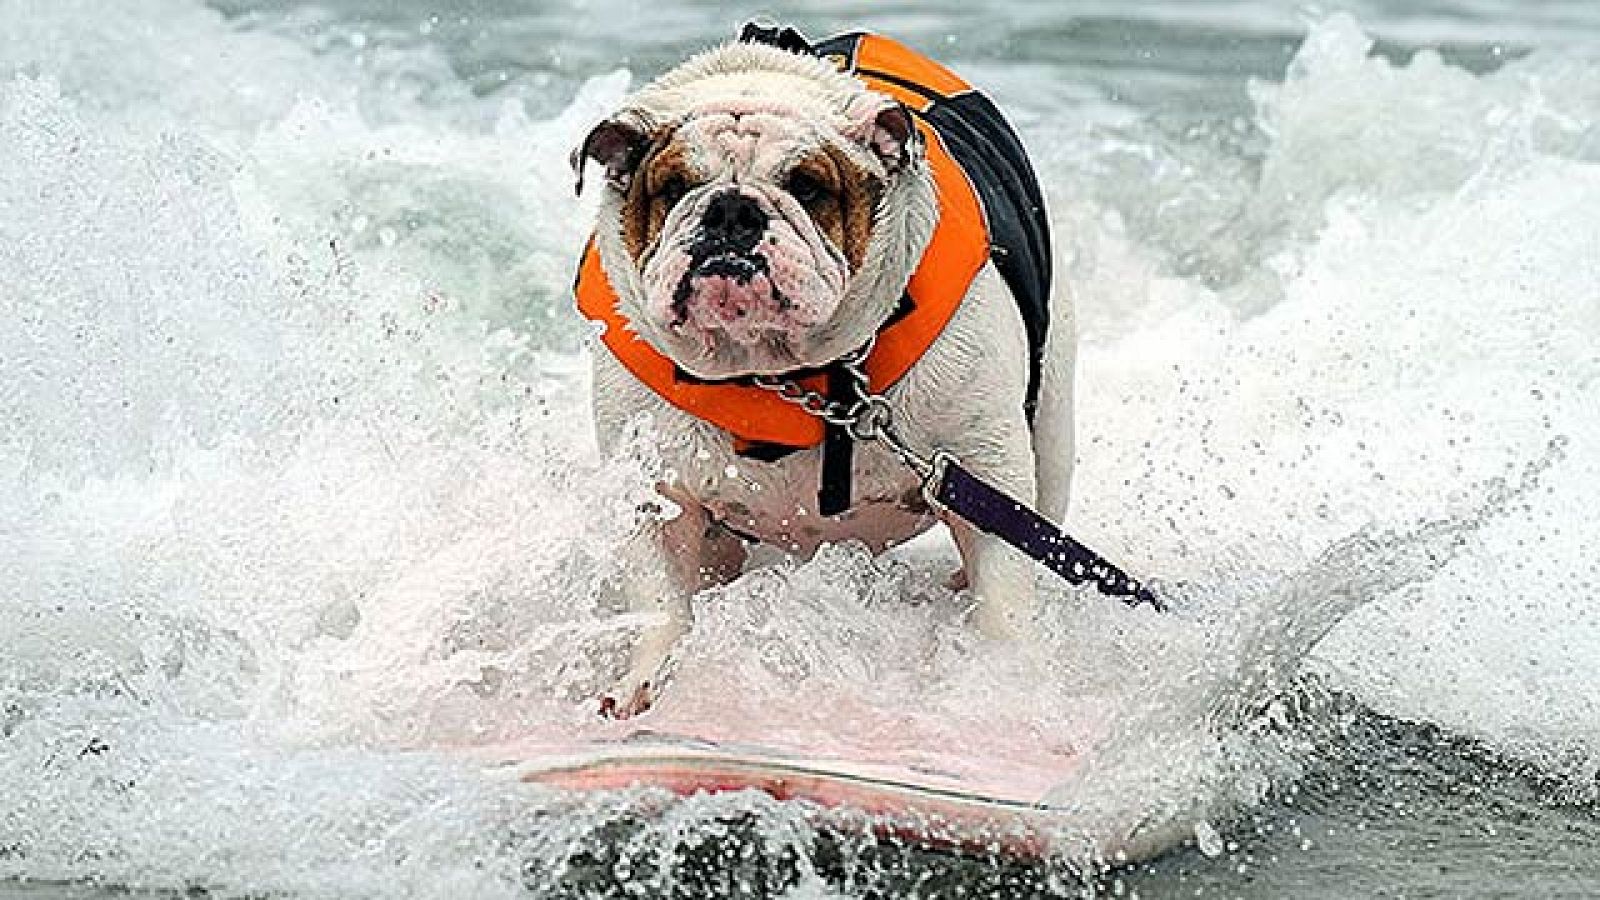 On Off: Perros surfistas